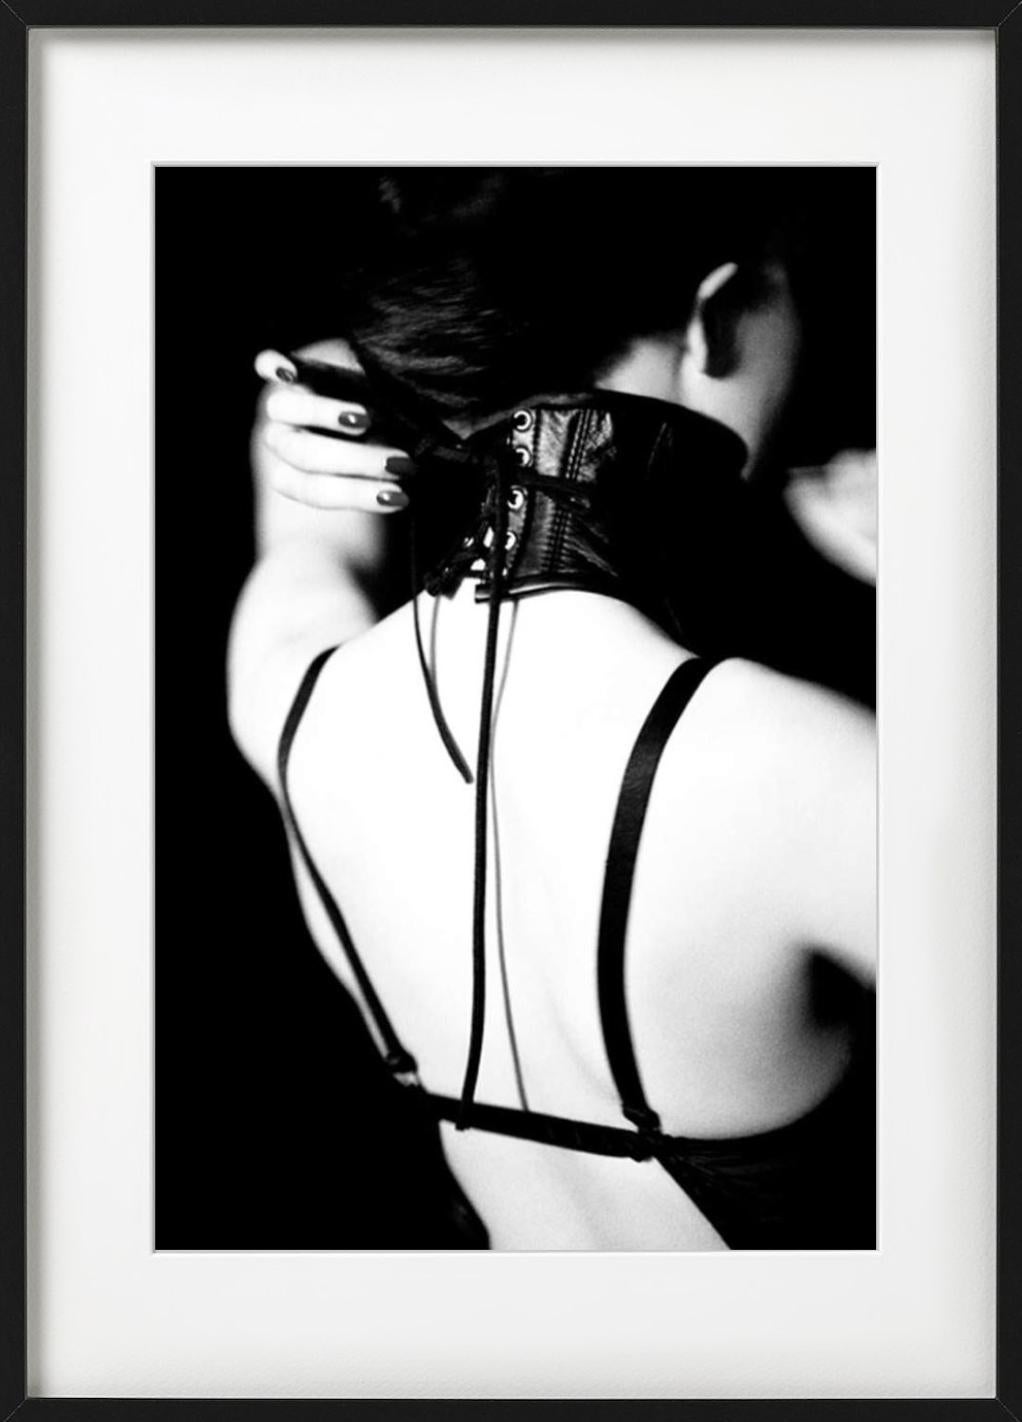 Halskrause - model in black lingerie and choker, fine art photography, 2010 - Photograph by Ellen von Unwerth